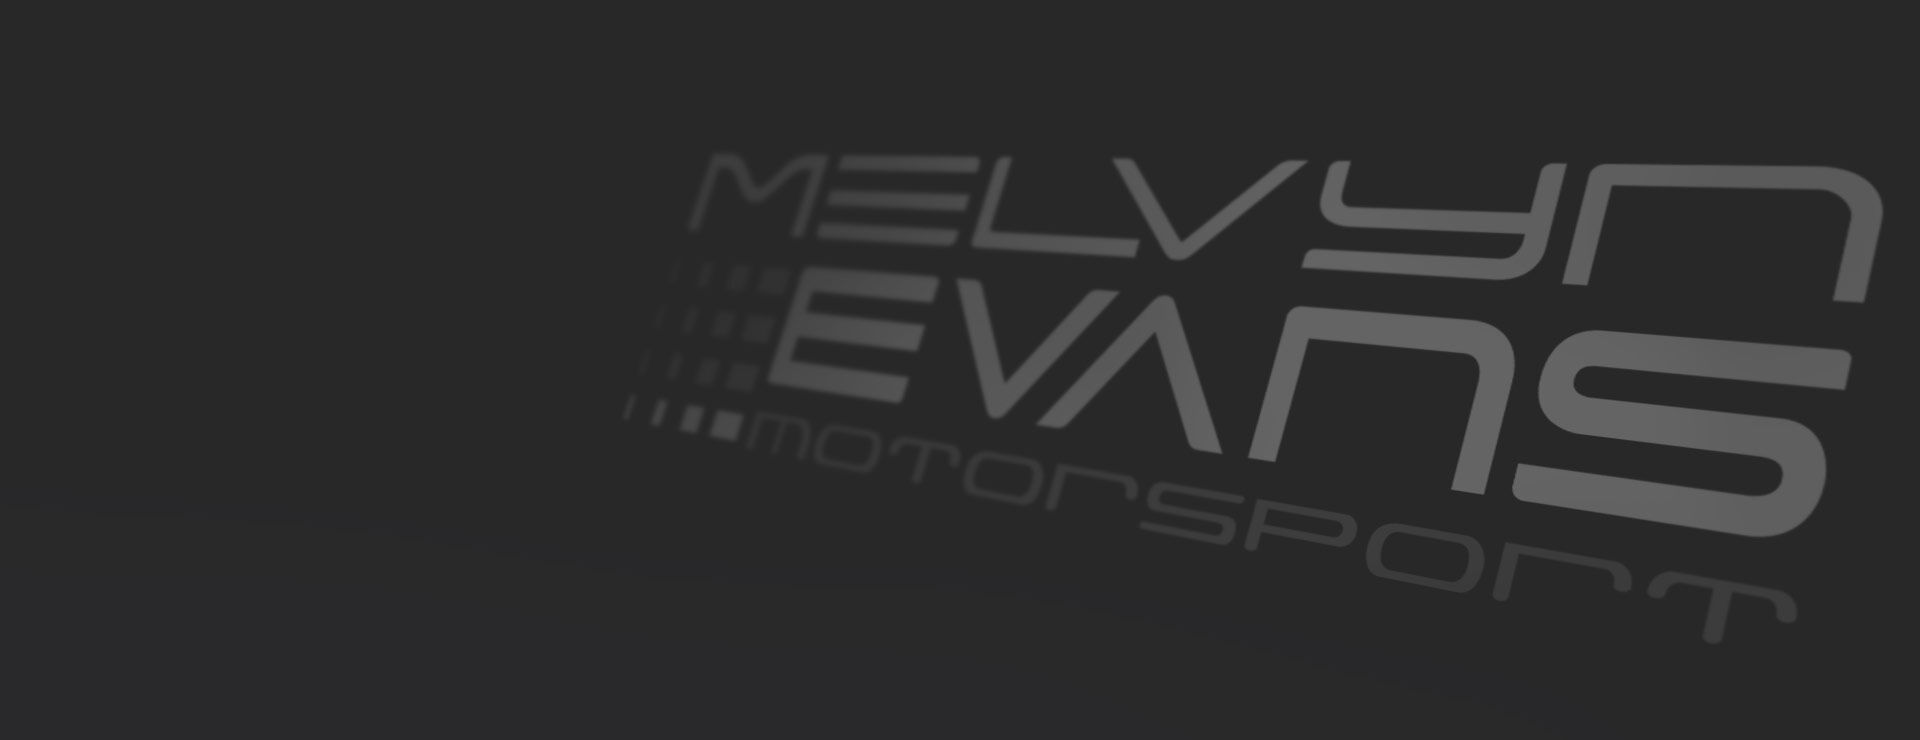 Melvyn Evans Motorsport